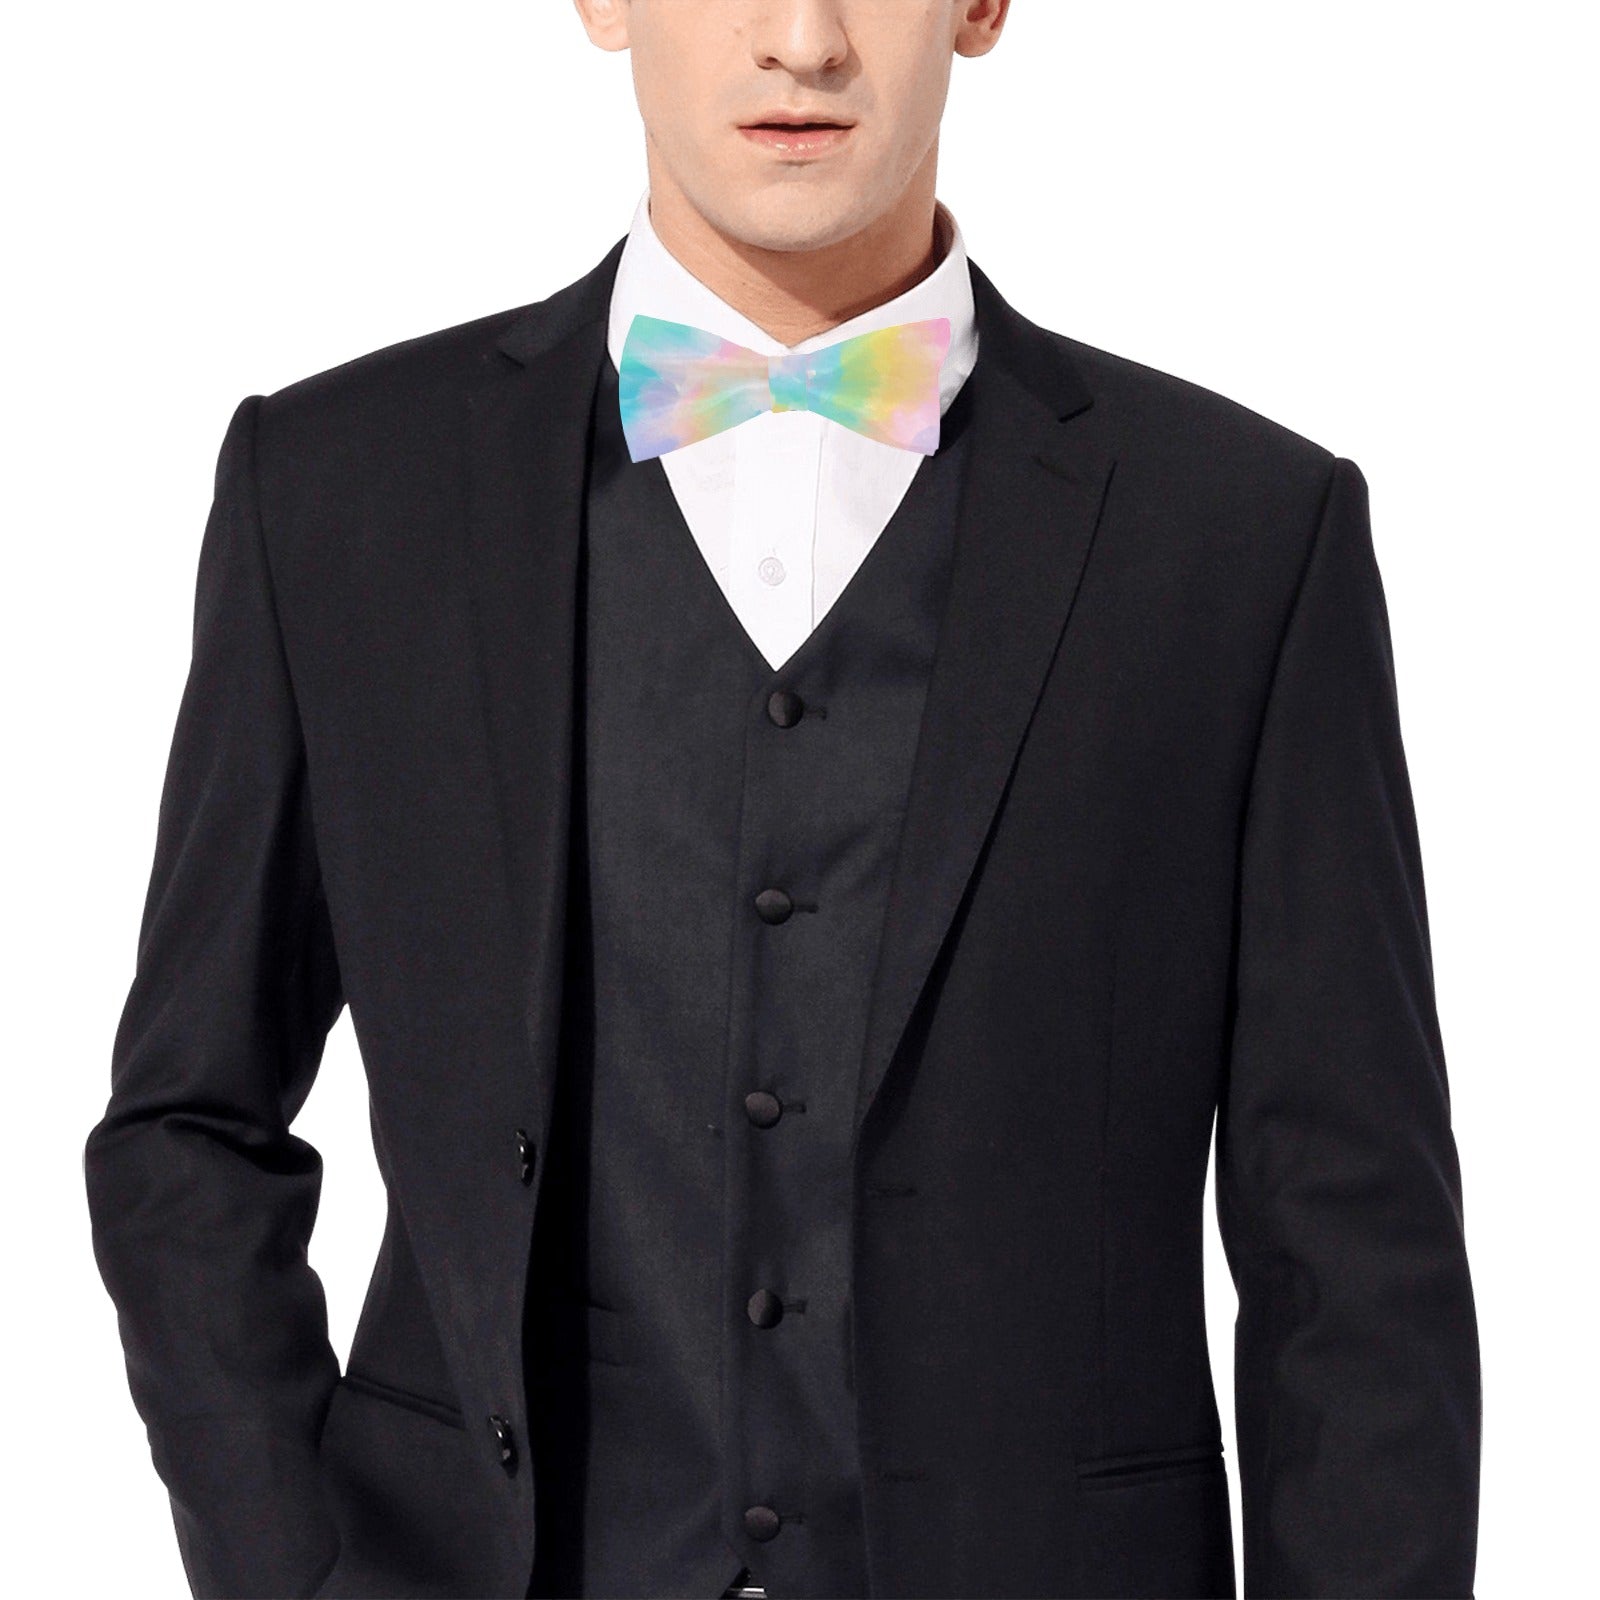 Pastel Tie Dye Bow Tie, Colorful Classic Chic Adjustable Pre Tied Bowtie Gift for Him Men Tuxedo Groomsmen Necktie Wedding Starcove Fashion